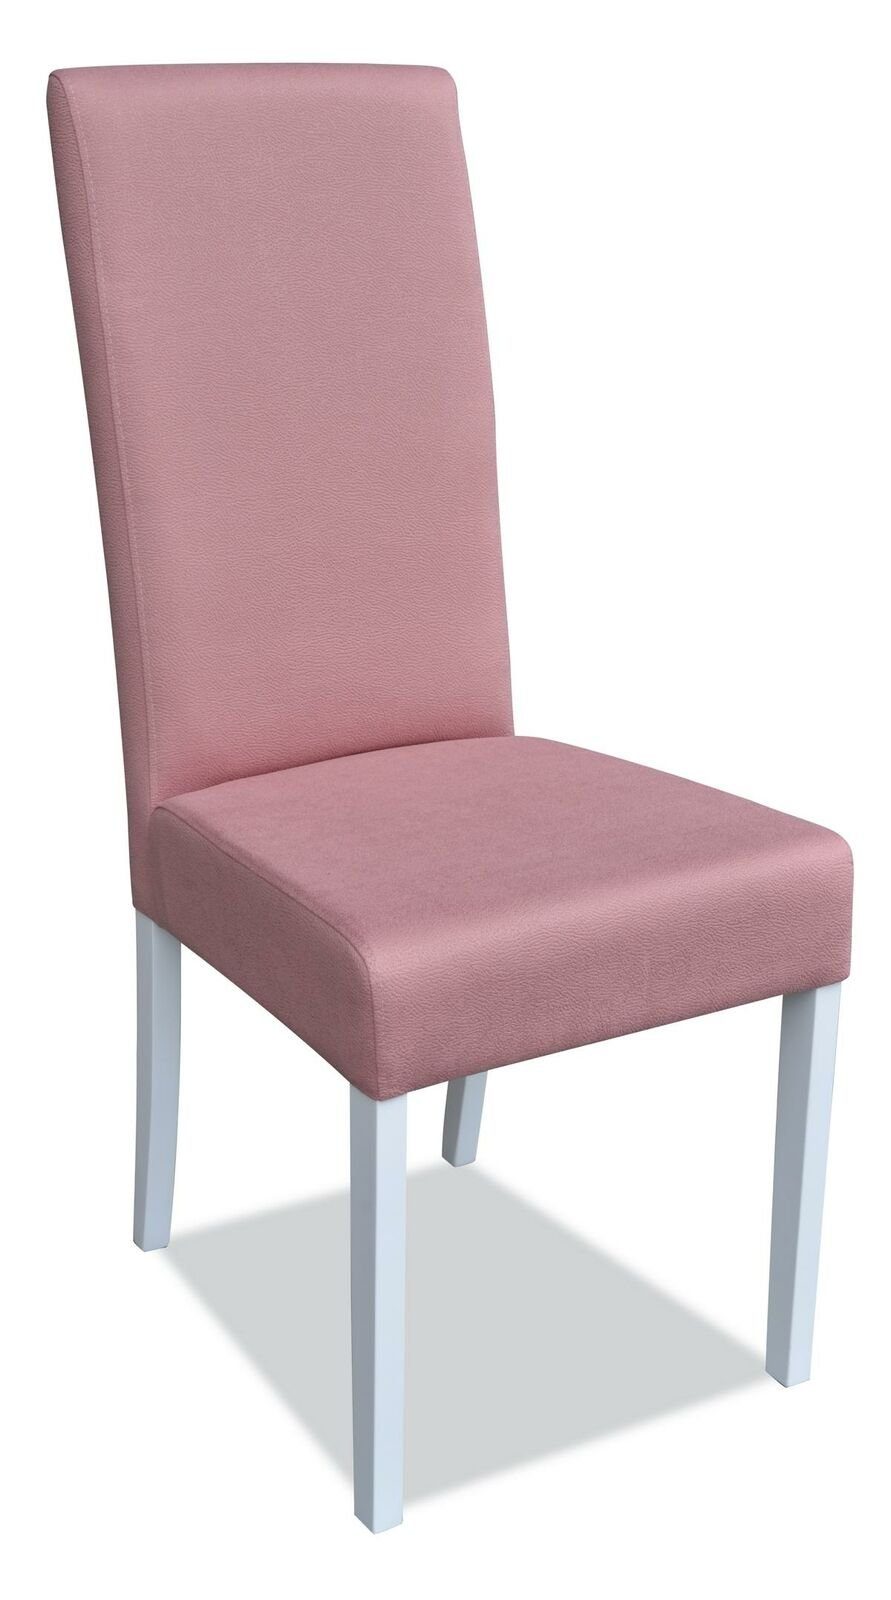 Wohnzimmer Stuhl Stuhl Möbel Elegant 4x Luxus Holz JVmoebel Set Neu Modern Stuhl,